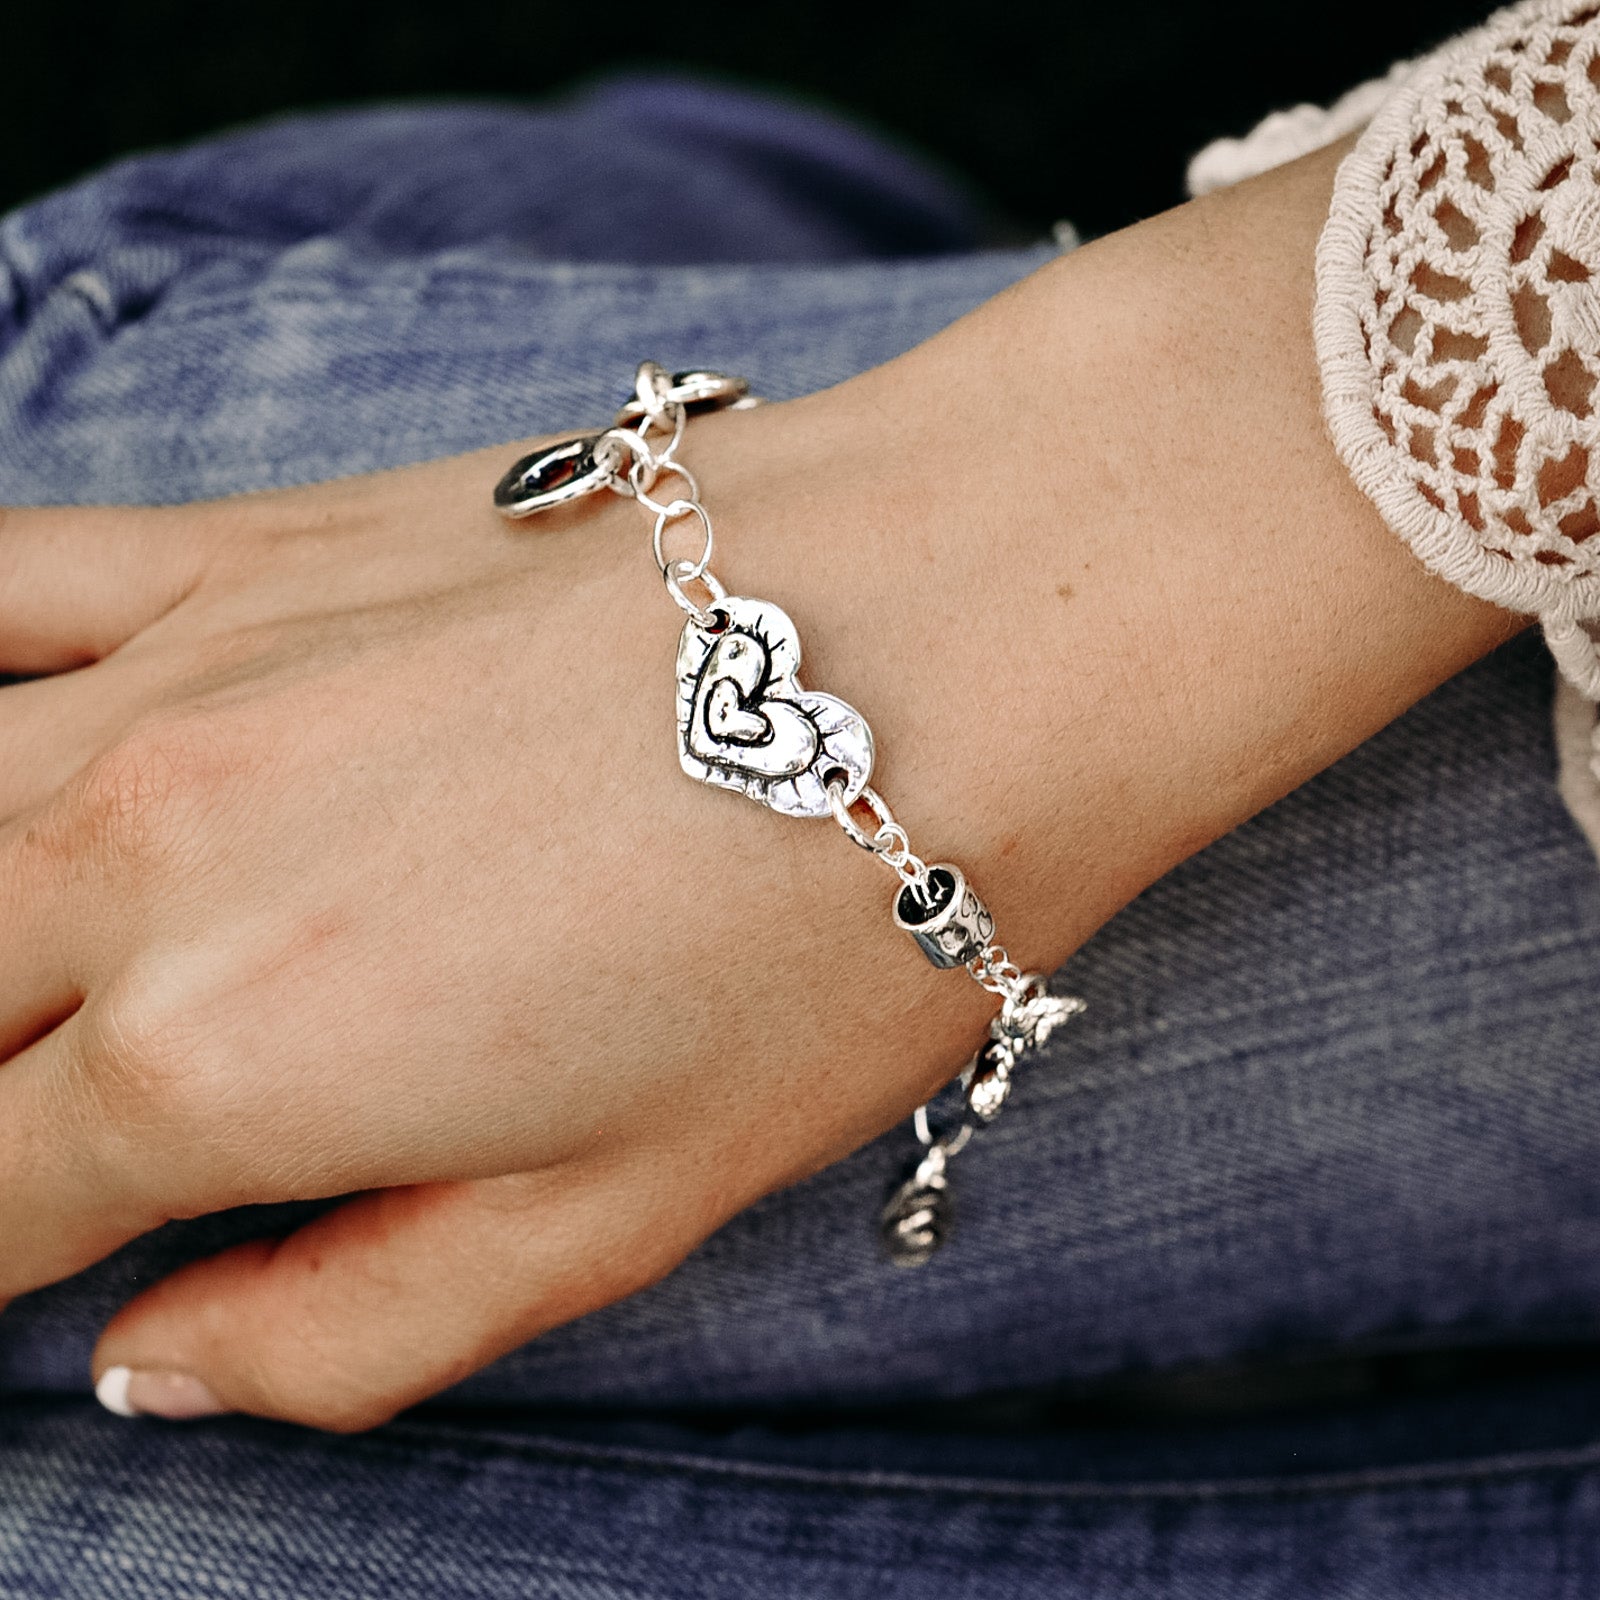 bra bracelet #girlfriend #give #bra #braclet #to #boyfriend #hand #lov